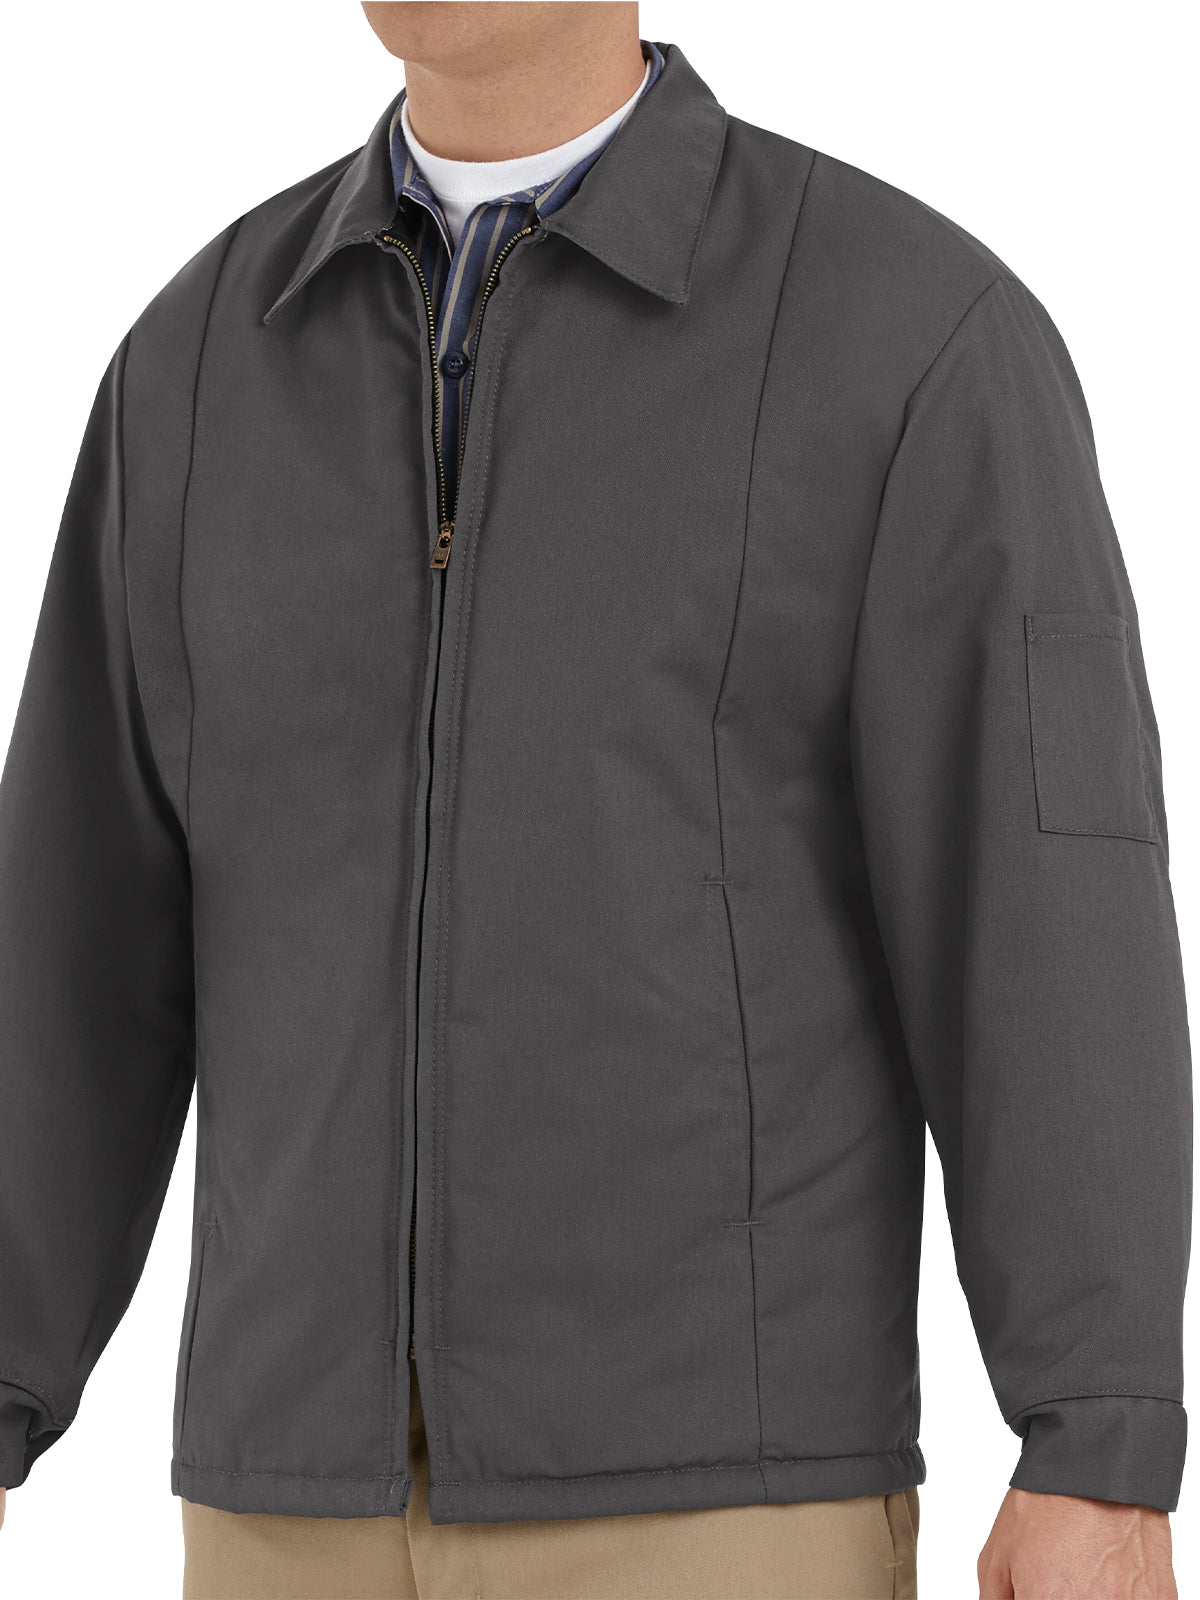 Men's Perma-Lined Panel Jacket